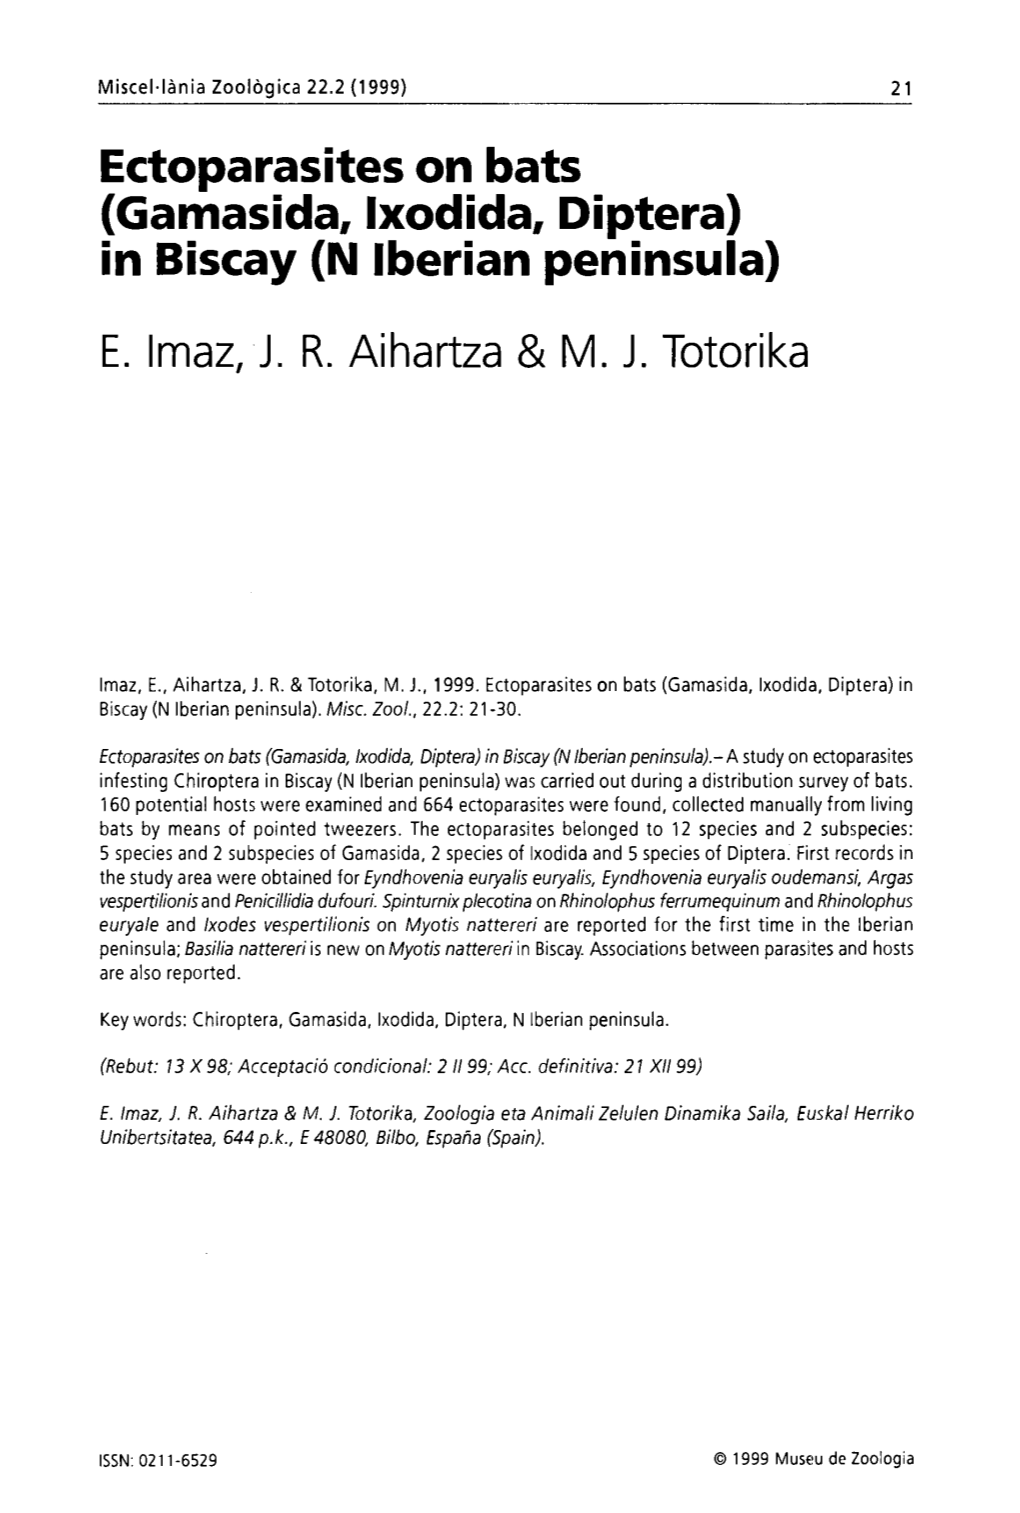 Ectoparasites on Bats (Gamasida, Ixodida, Diptera) in Biscay (N Lberian Peninsula)